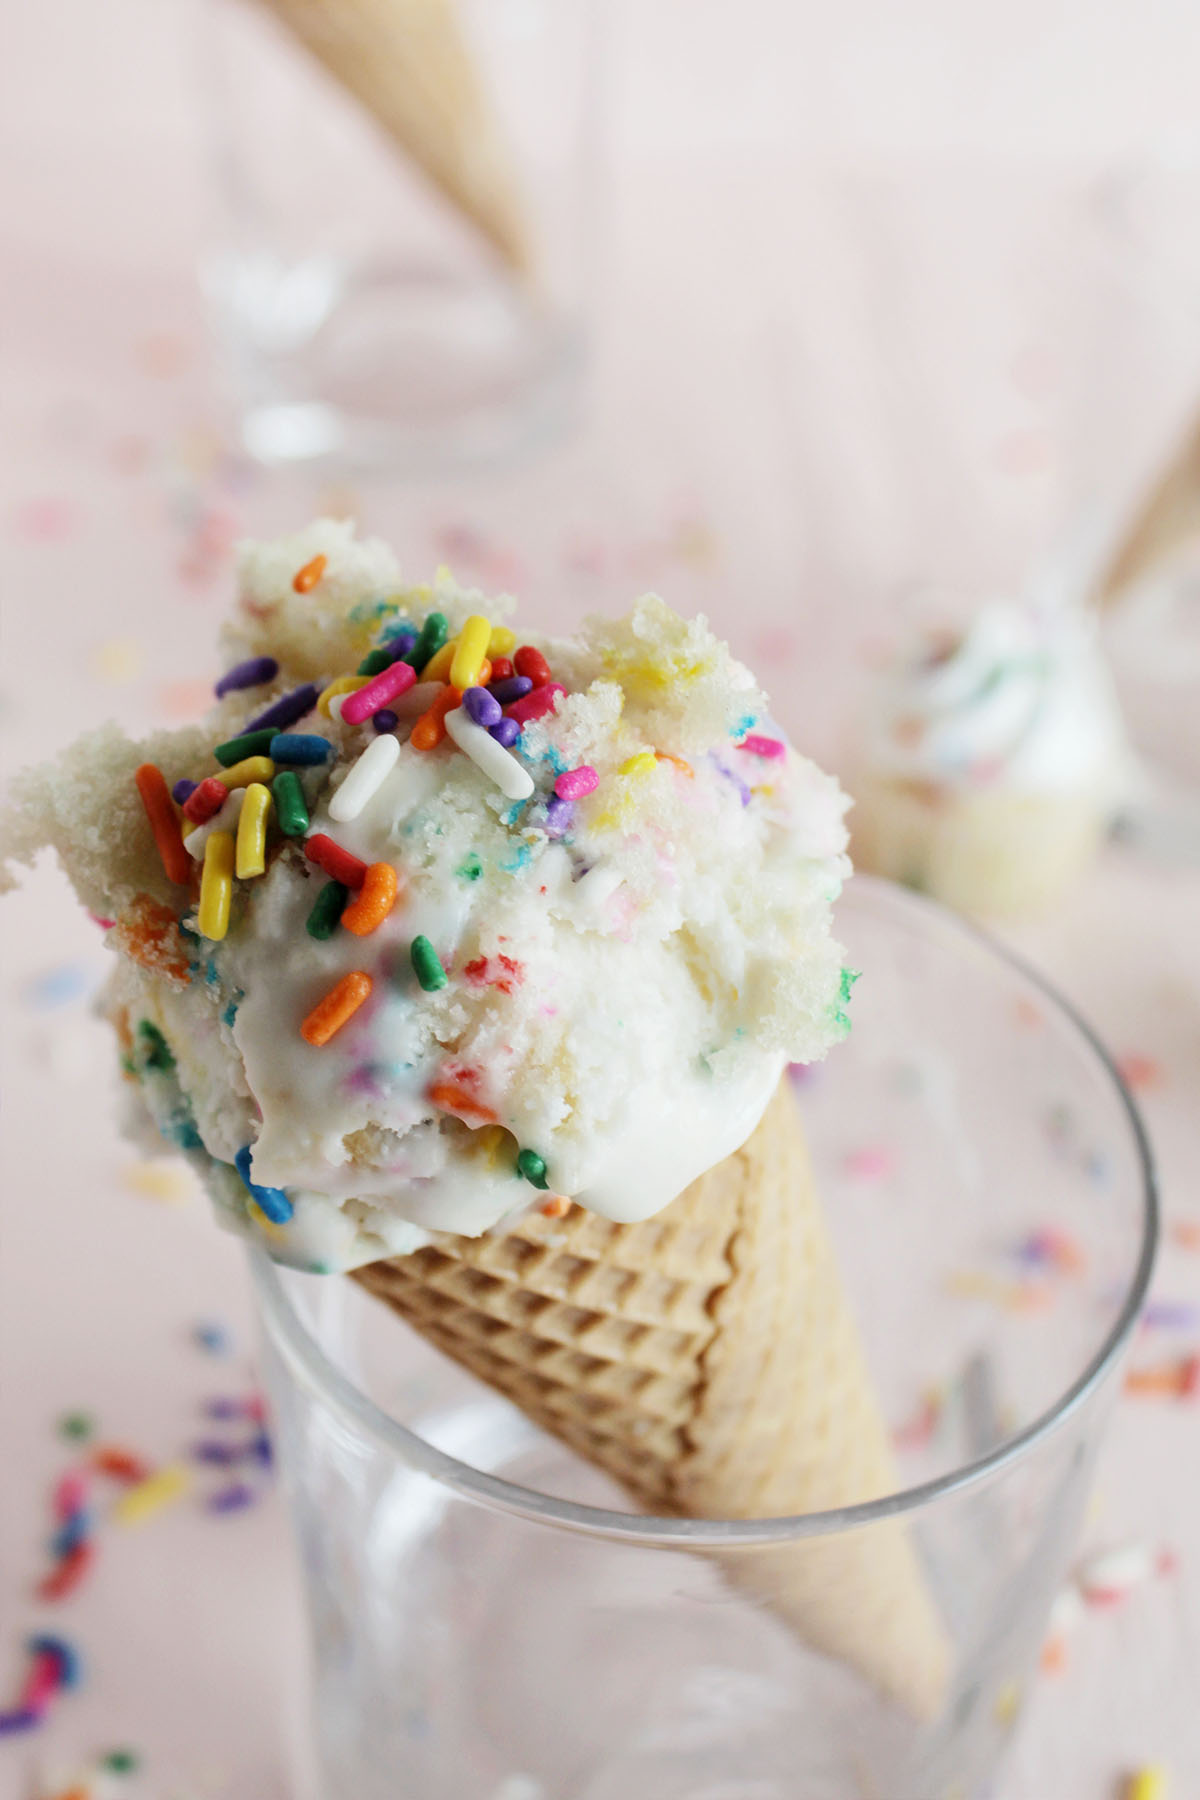 vanilla ice cream with rainbow sprinkles with cake chunks.